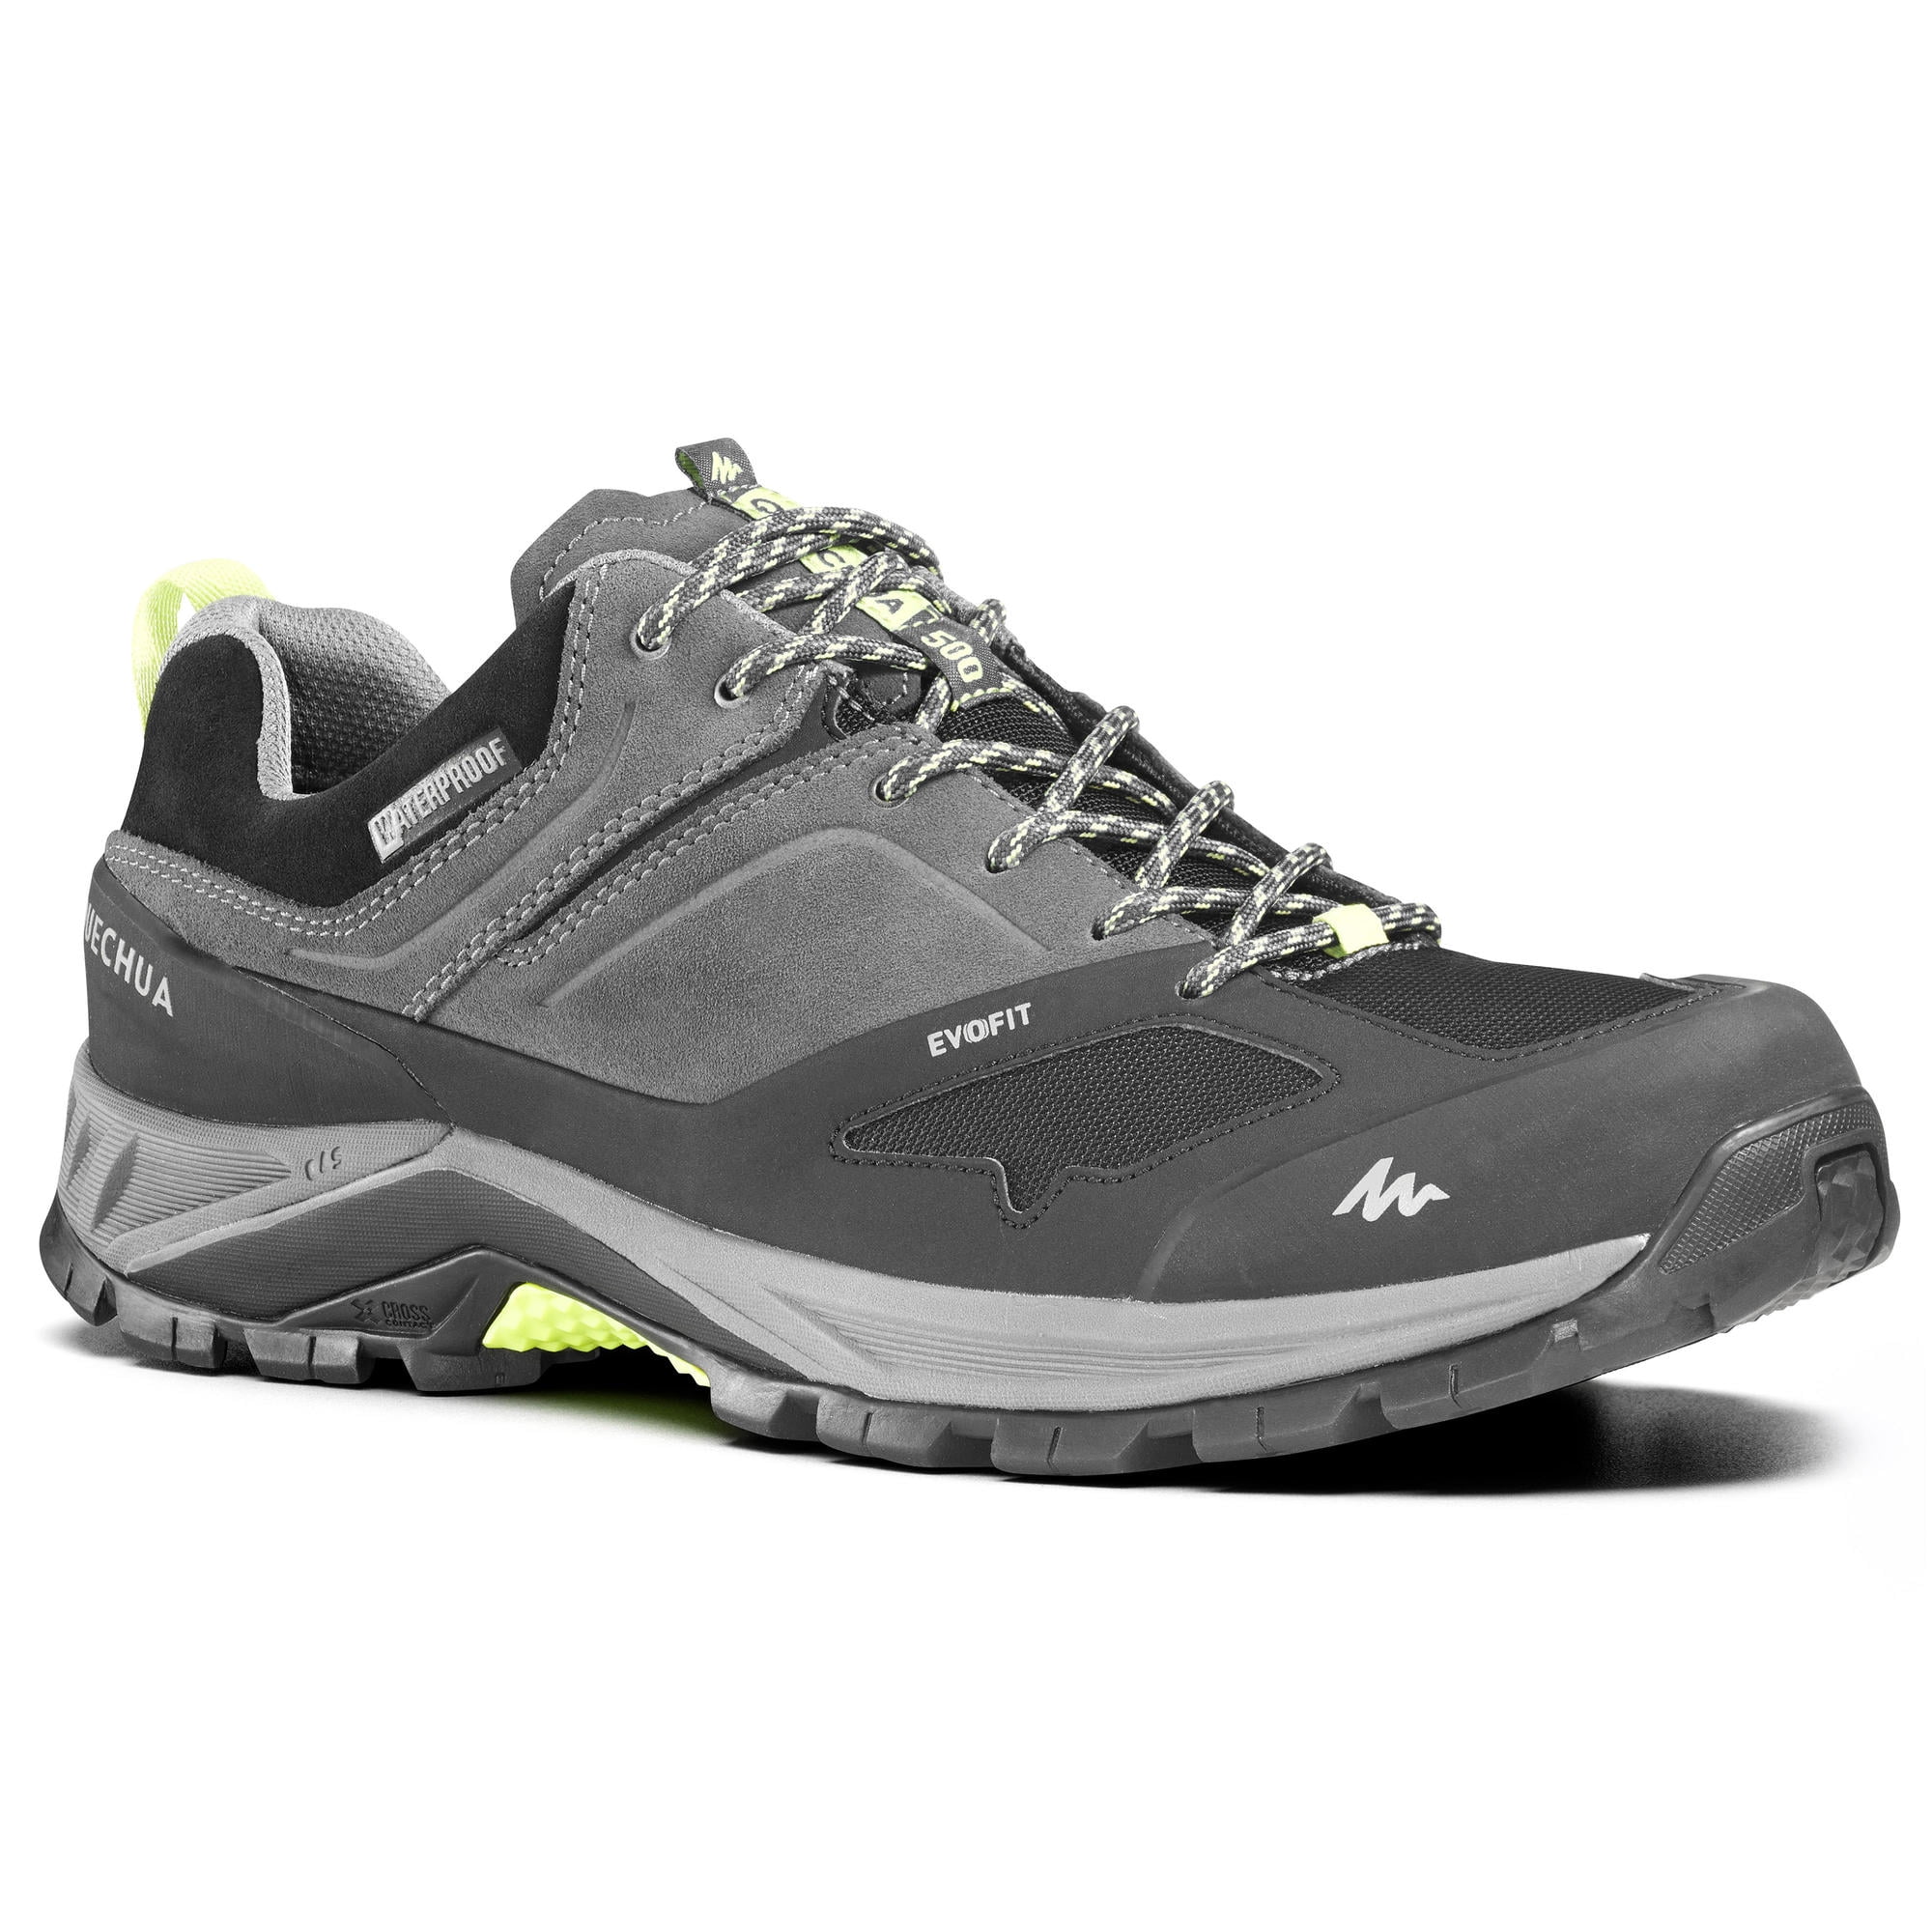 decathlon men's hiking shoes